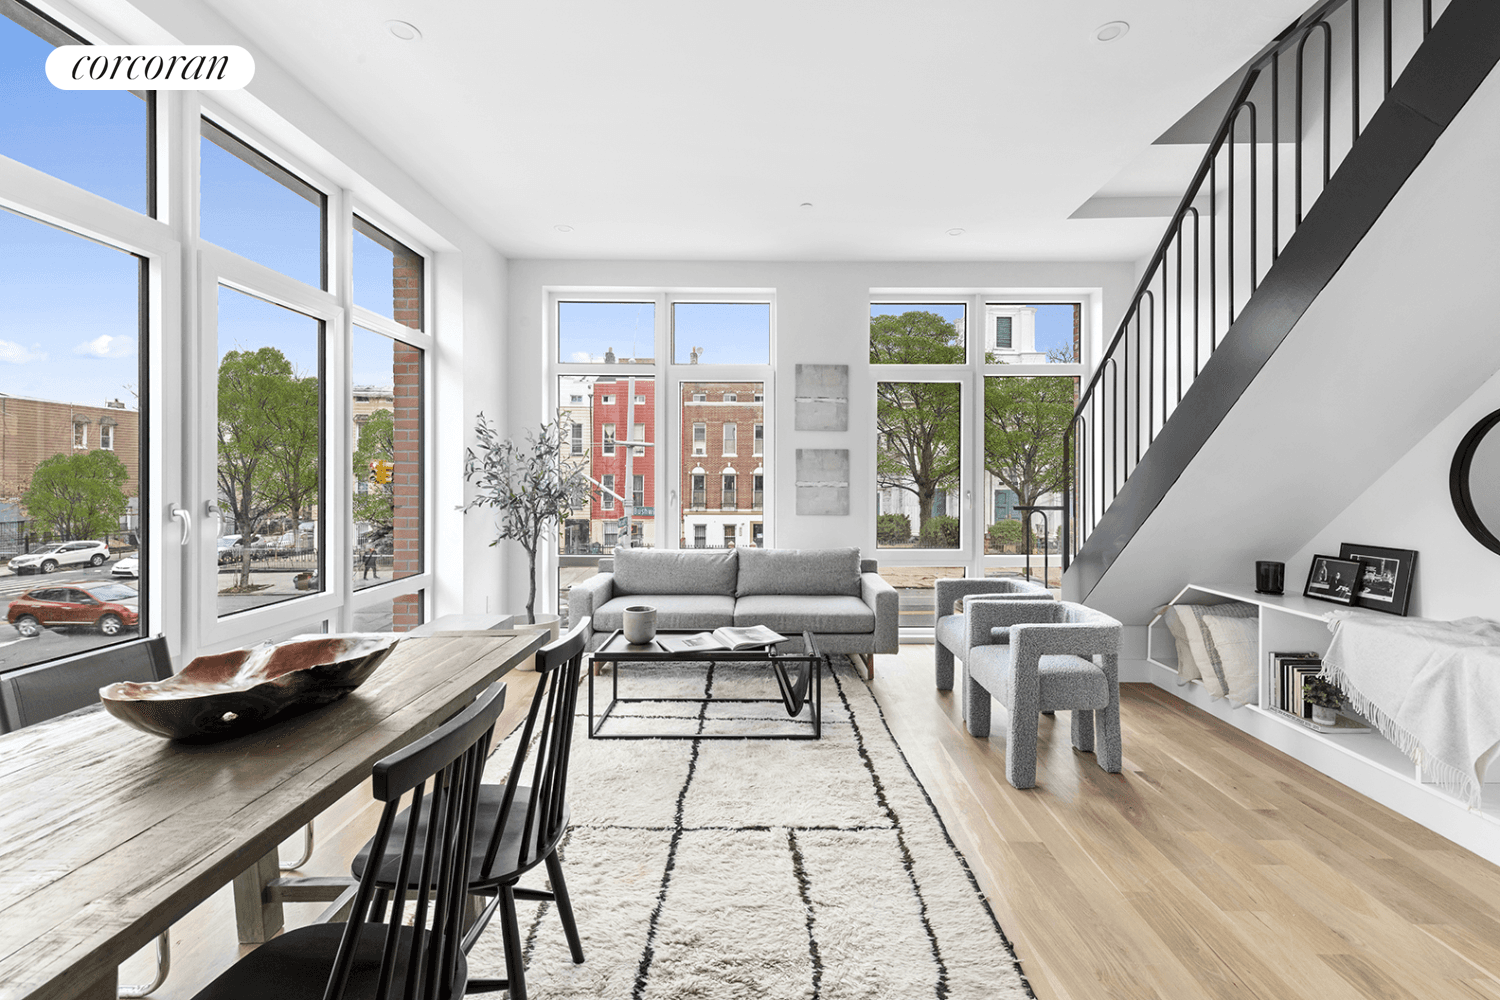 Welcome to 46 Kossuth Place, the premier new development condominium in Bushwick, Brooklyn.